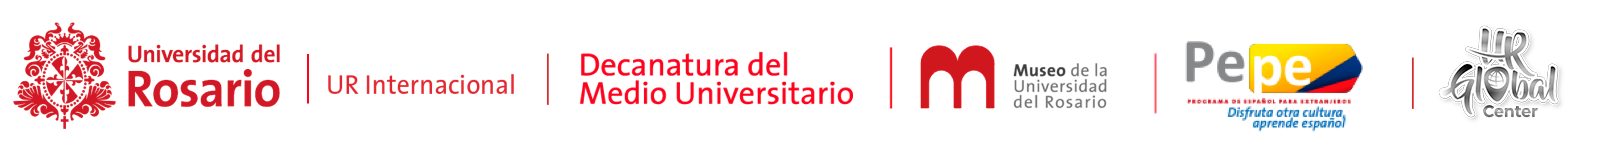 Vive Colombia - Logos de organizadores